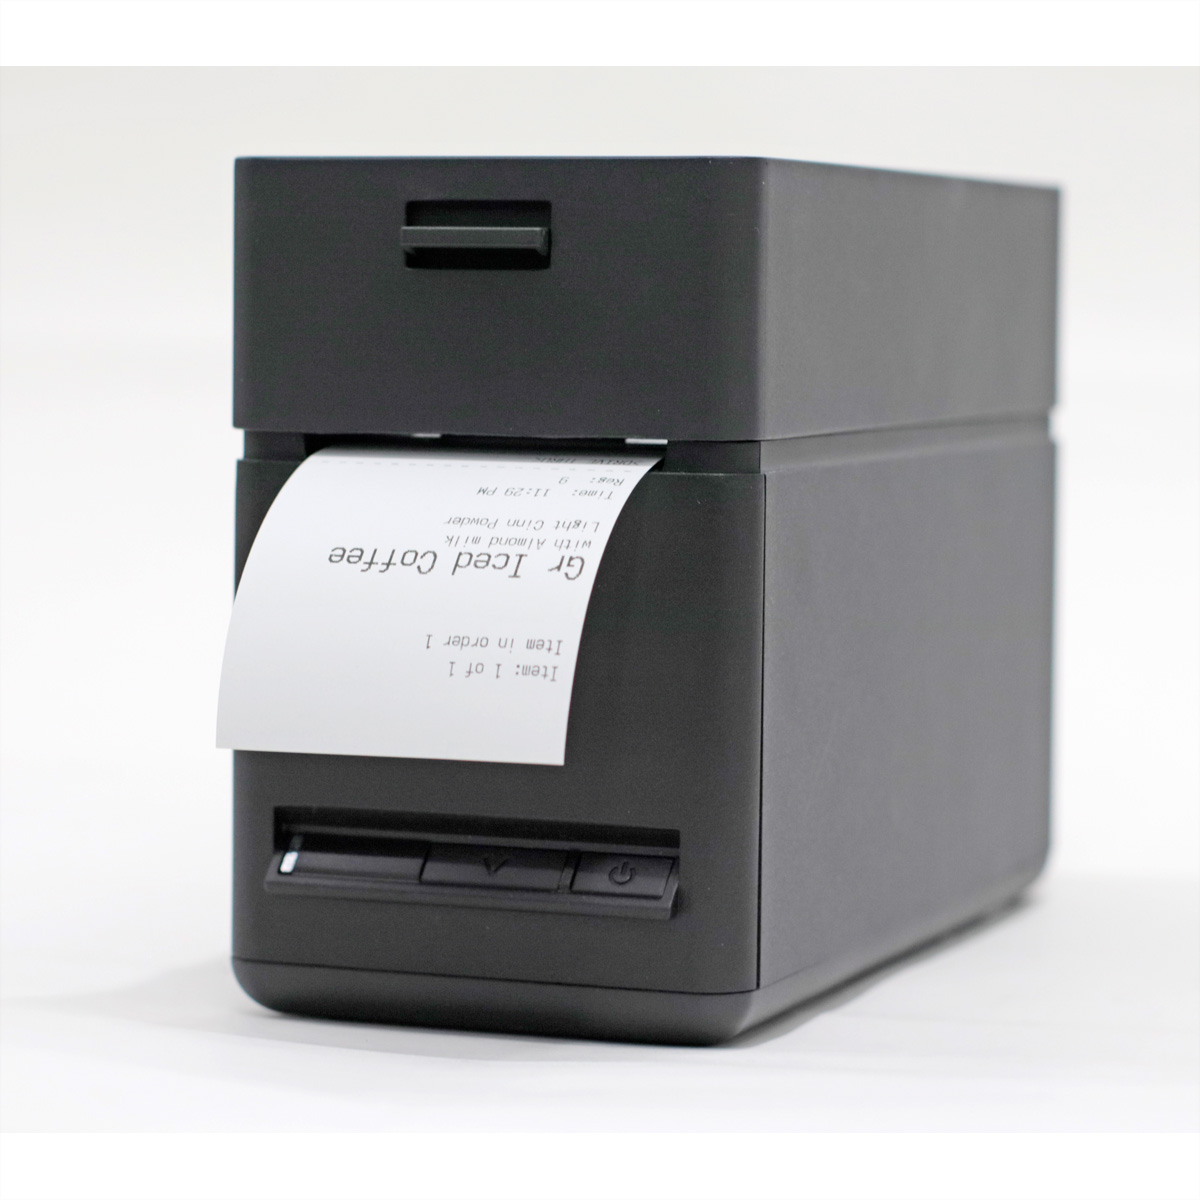 SEIKO SLP-720RT WLAN Labeldrucker